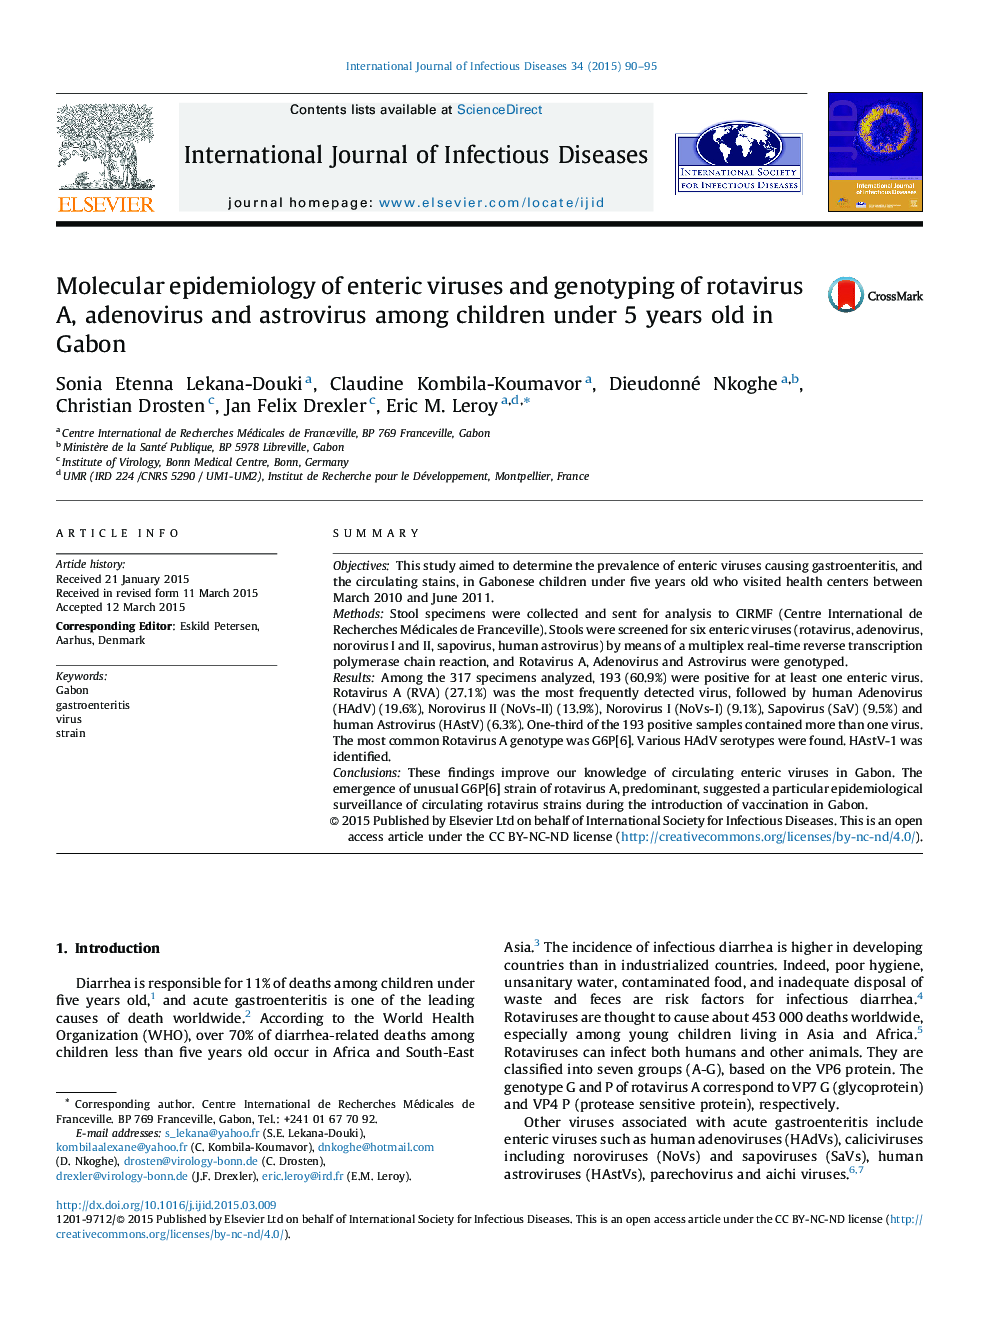 Molecular epidemiology of enteric viruses and genotyping of rotavirus A, adenovirus and astrovirus among children under 5 years old in Gabon